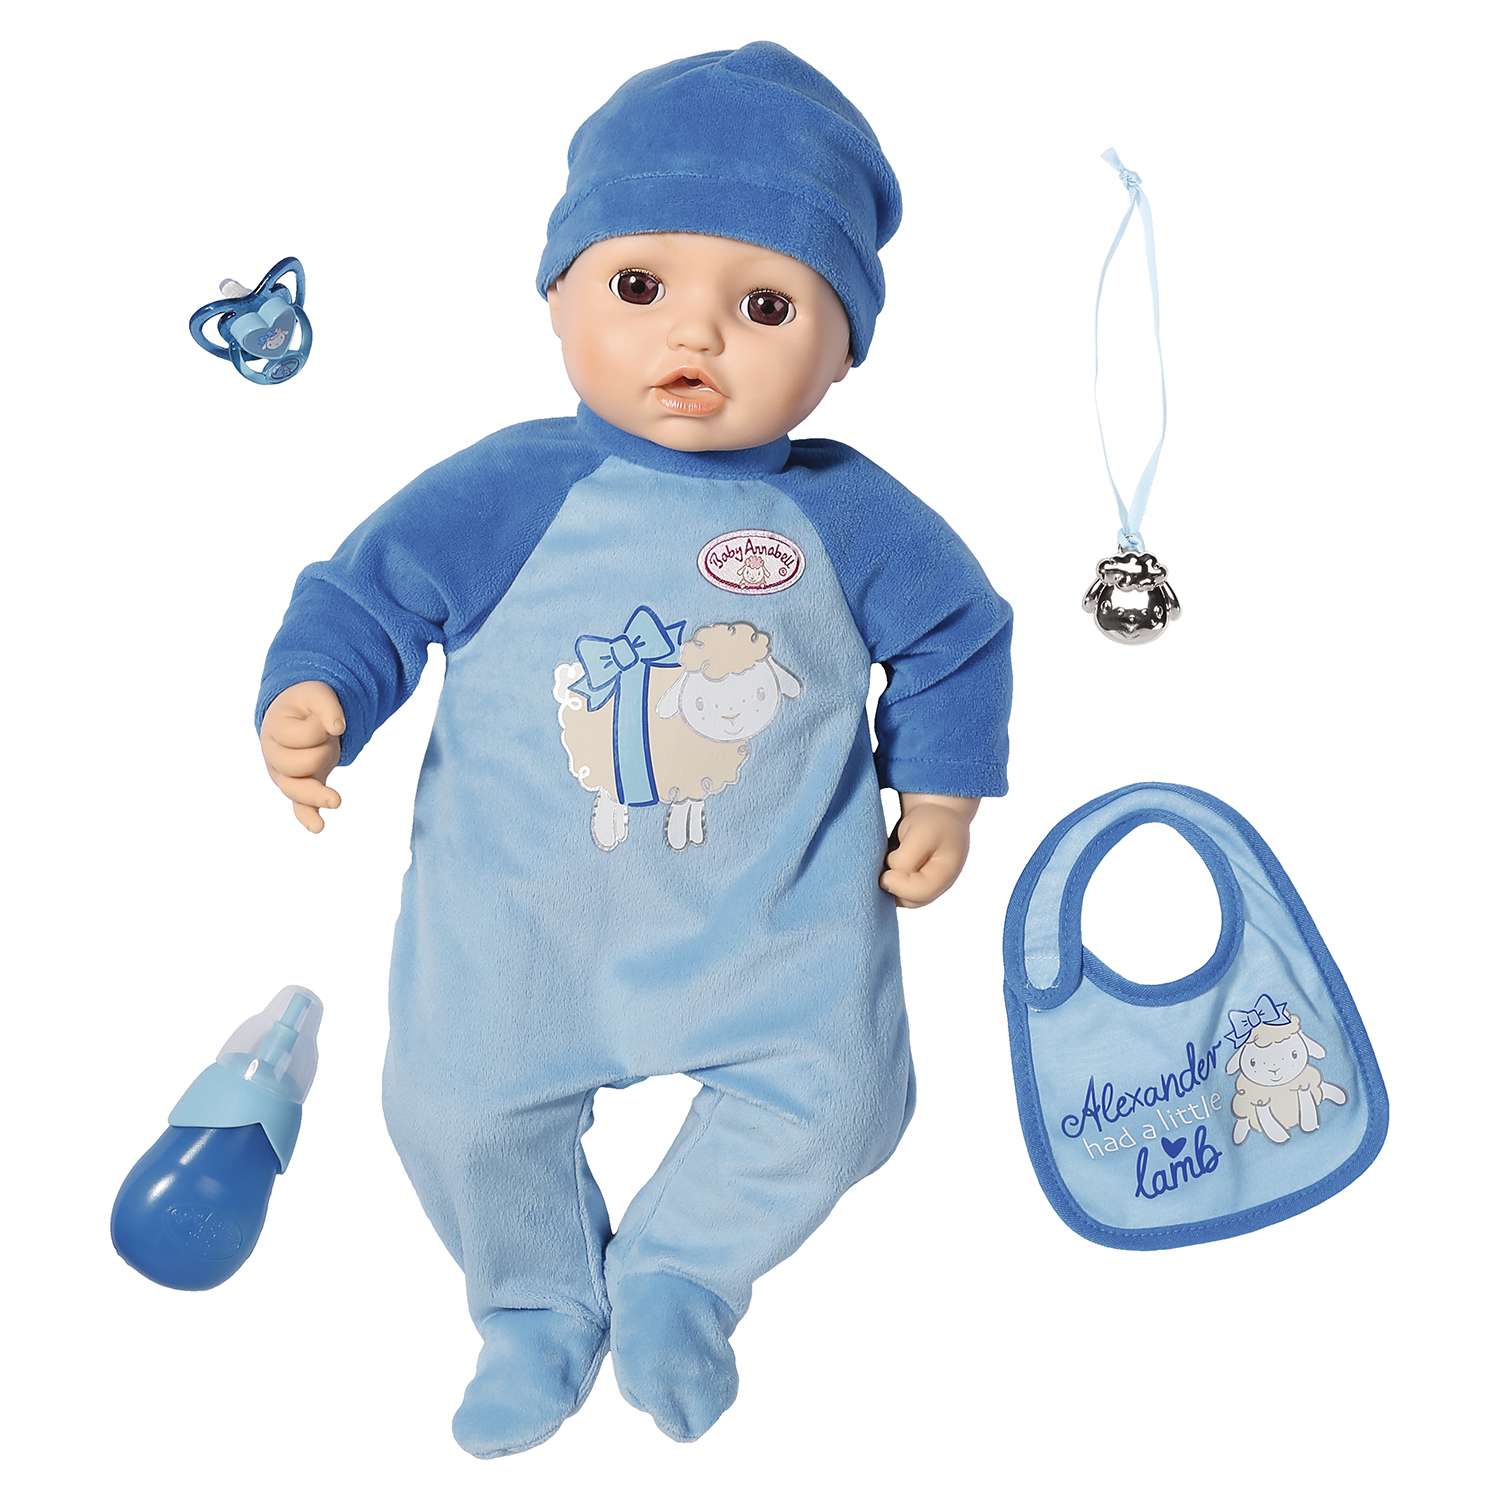 Кукла Baby Zapf Creation Annabell мальчик многофункциональная 701-898 701-898 - фото 1